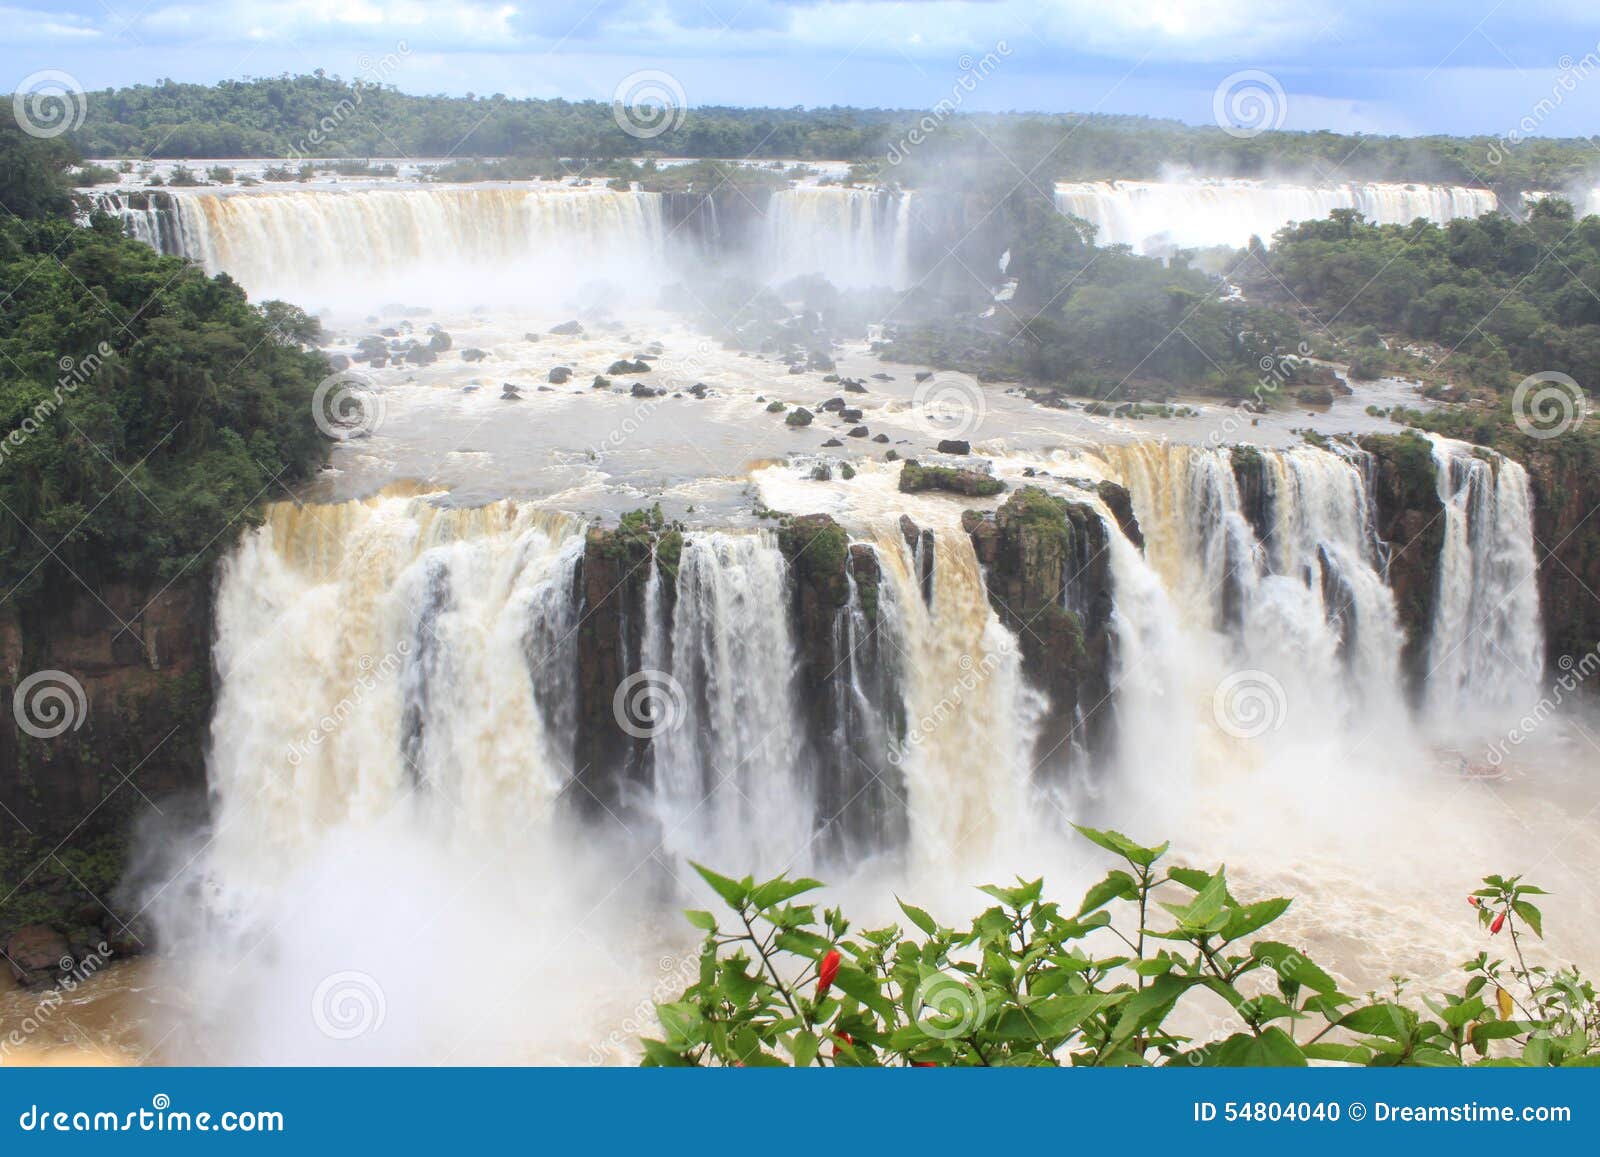 iguazu falls, brazil, argentina, paraguay